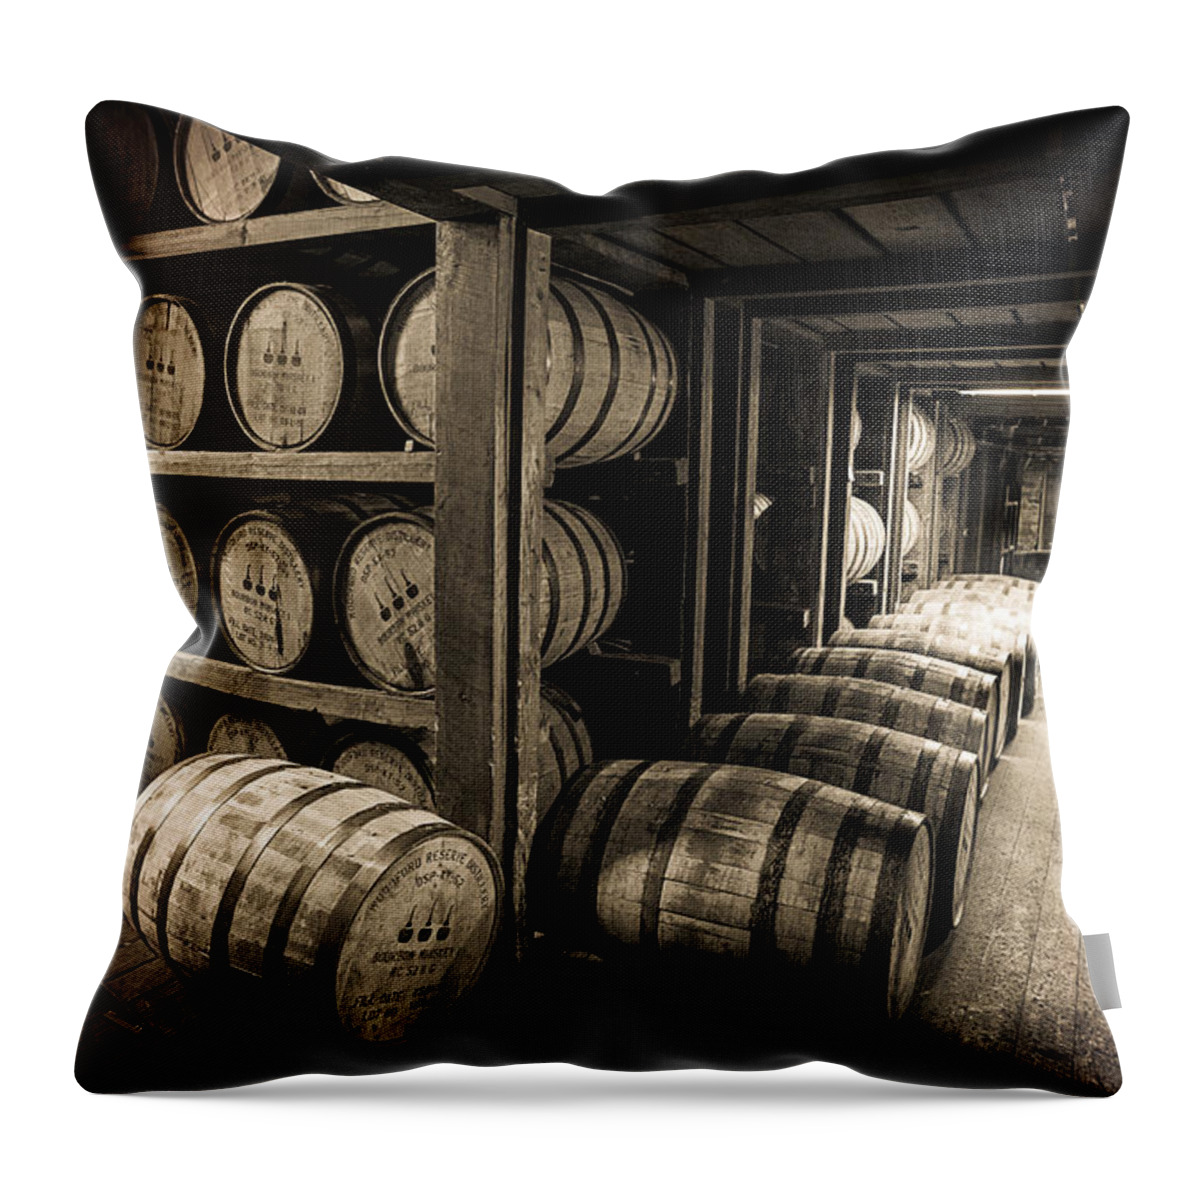 Bourbon Throw Pillow featuring the photograph Bourbon Barrels by Karen Varnas